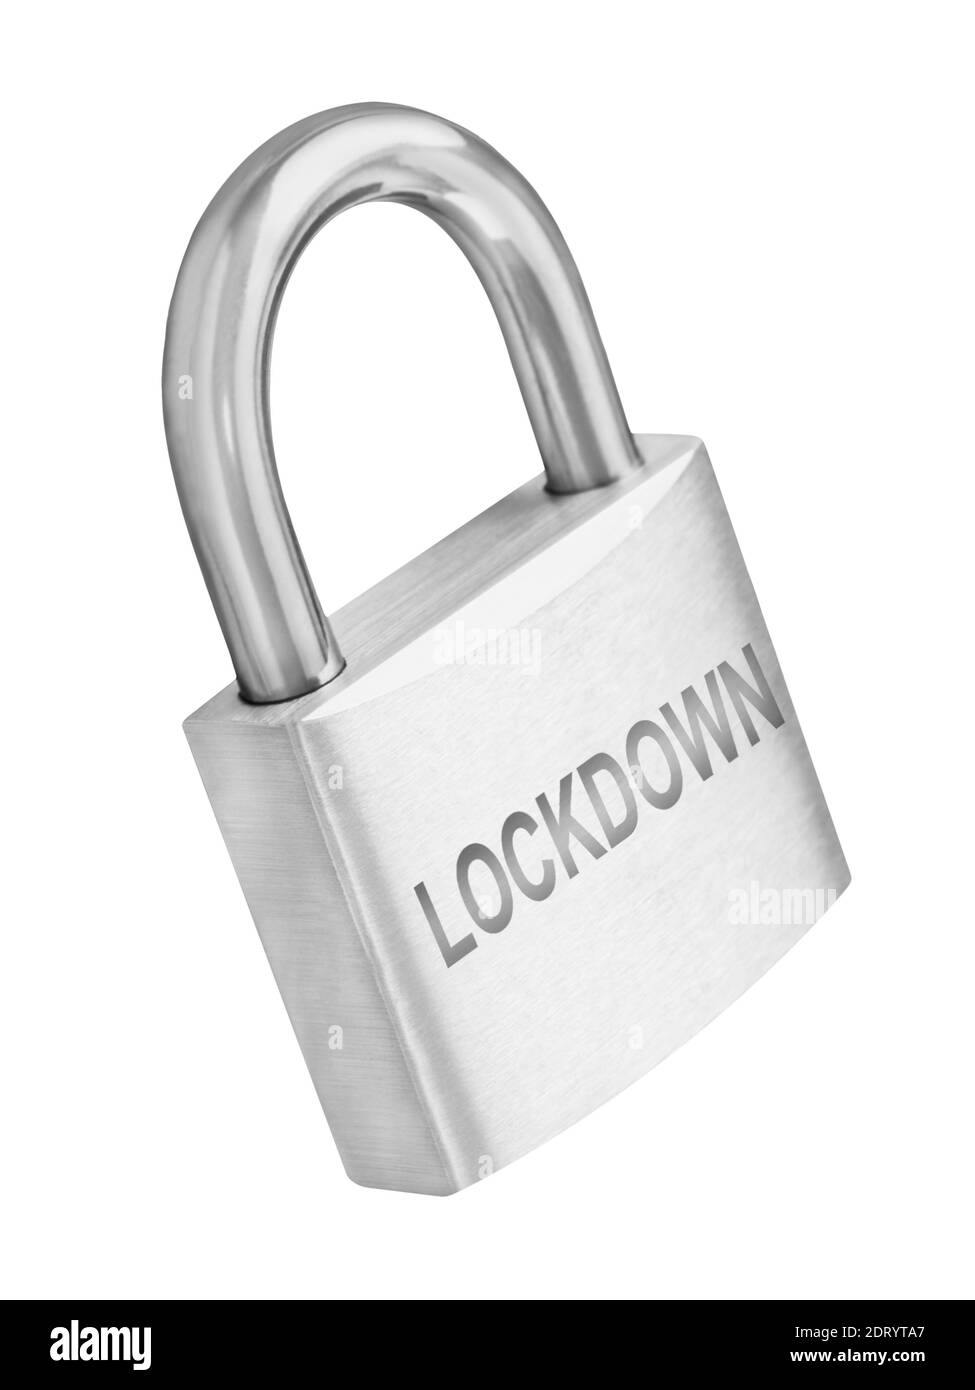 Lockdown Padlock isolated against white background Stock Photo